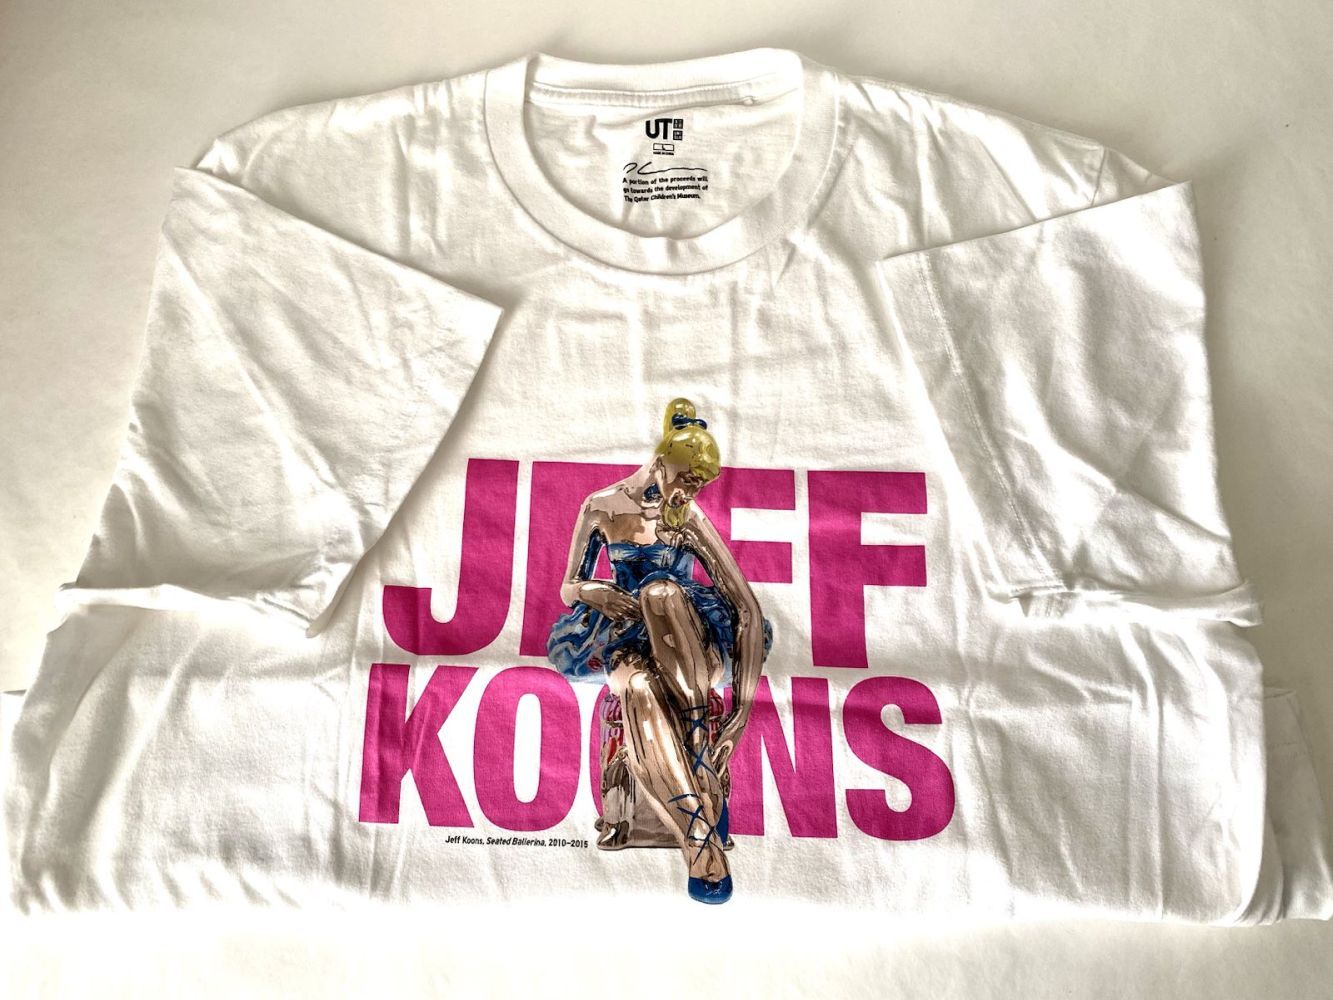 Jeff Koons x Uniqlo - Seated Ballerina T-Shirt 杰夫-昆斯 x 优衣库 - 坐着的芭蕾舞女郎 T恤

白色棉质T恤&hellip;